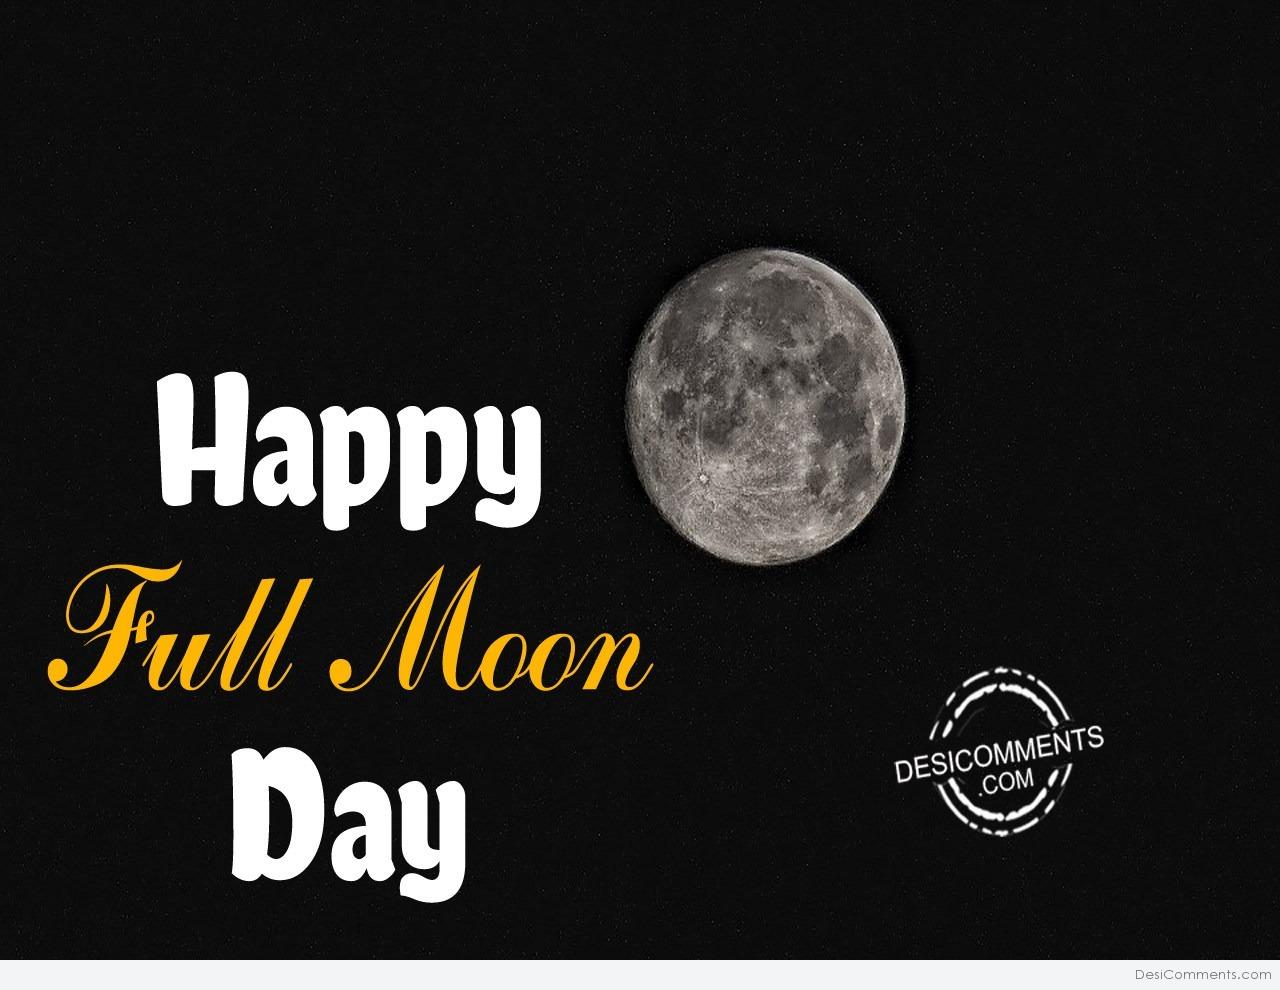 Moon даты. Moon Day. Happy Full. Monday Moon Day.